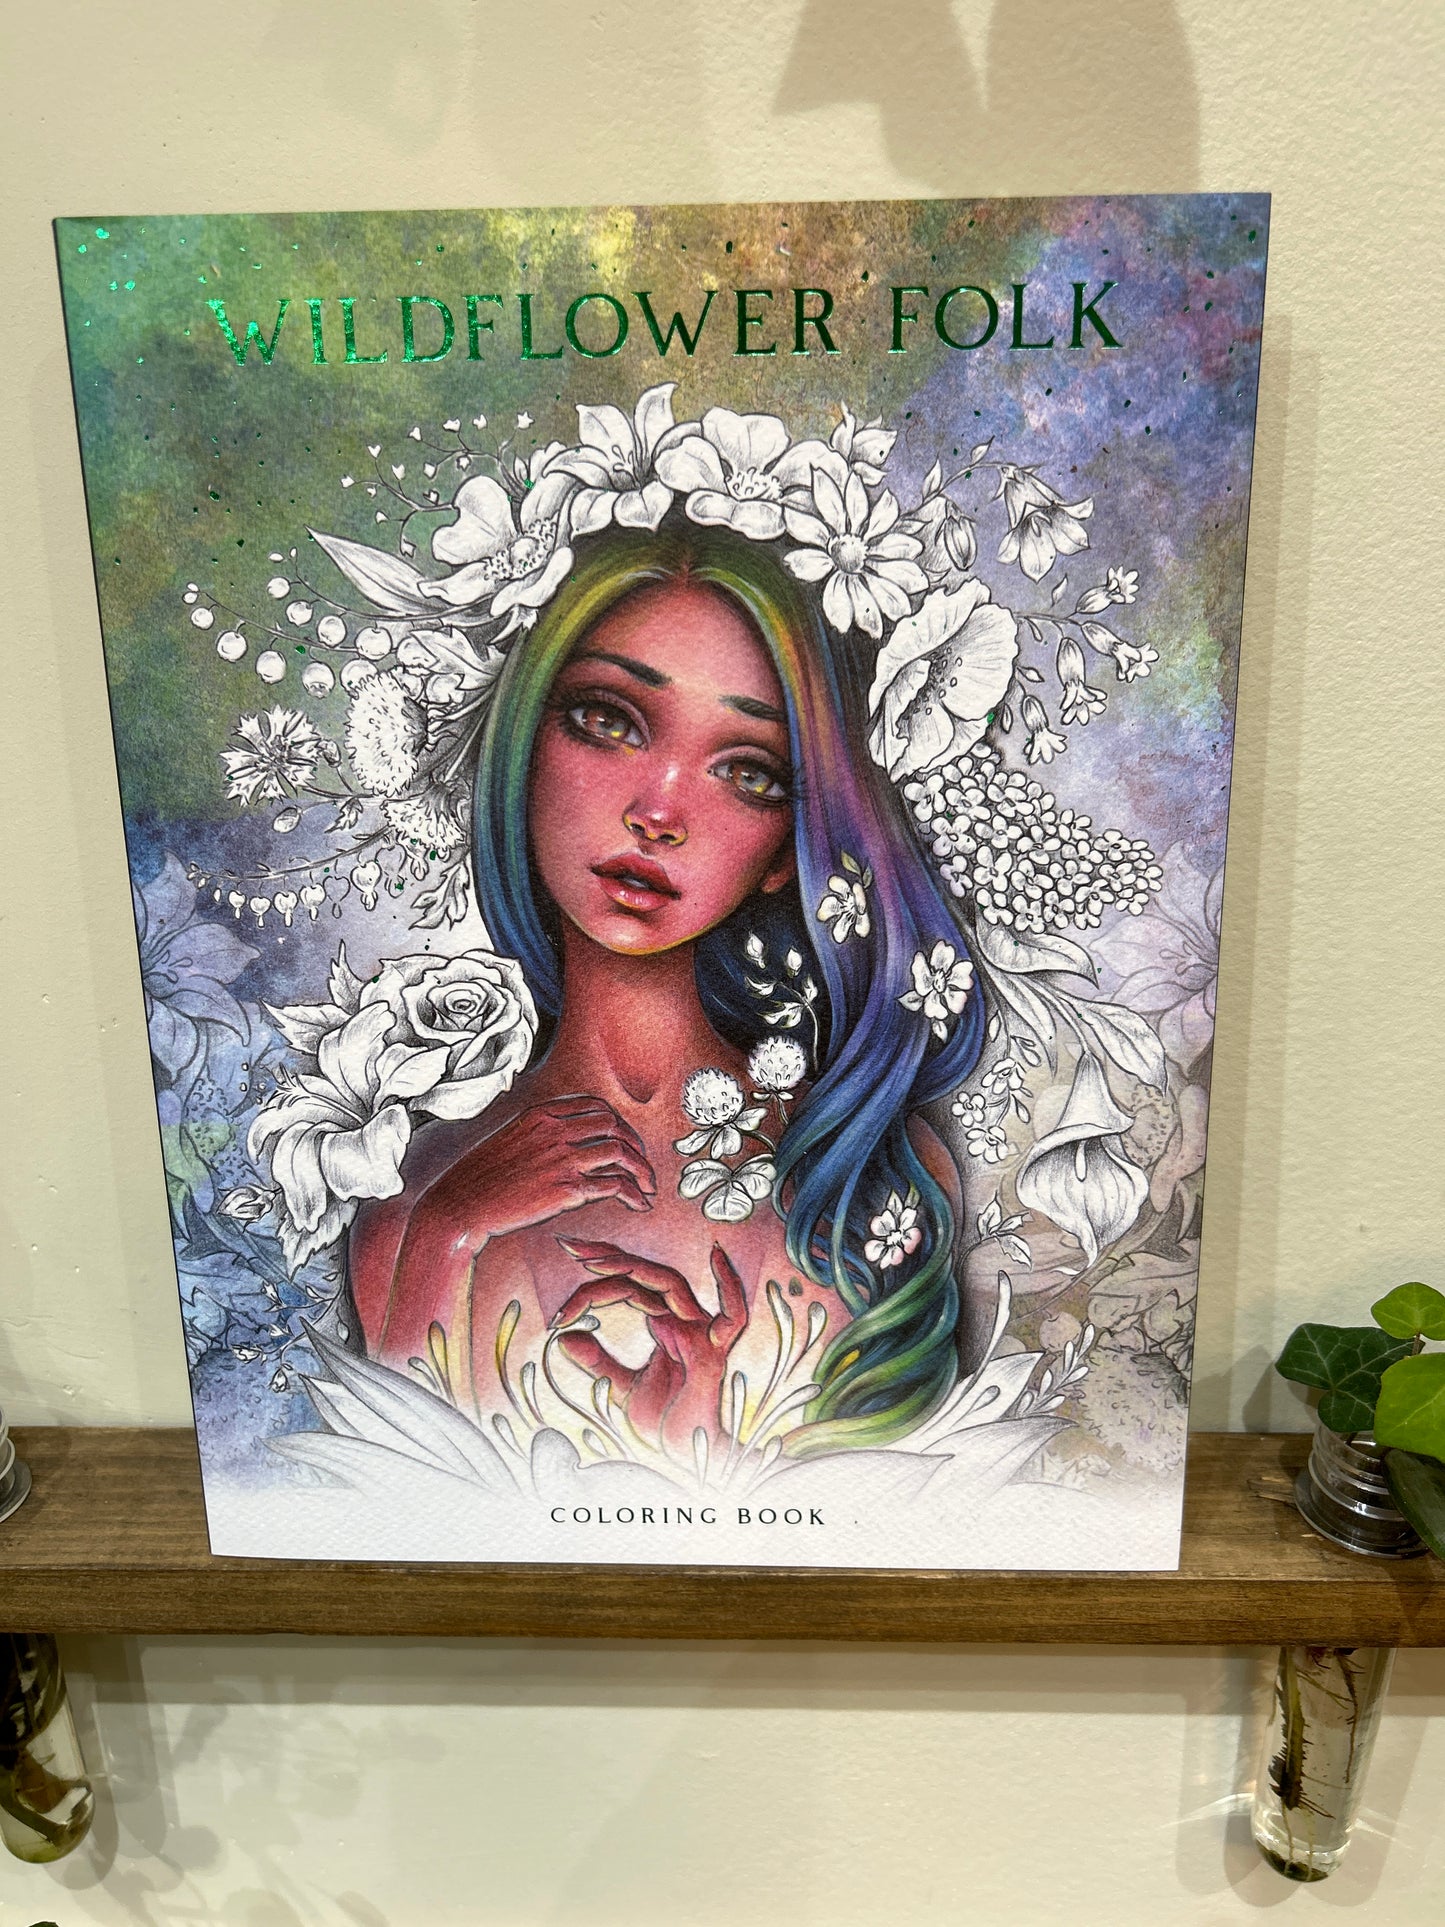 Wildflower folk colouring book